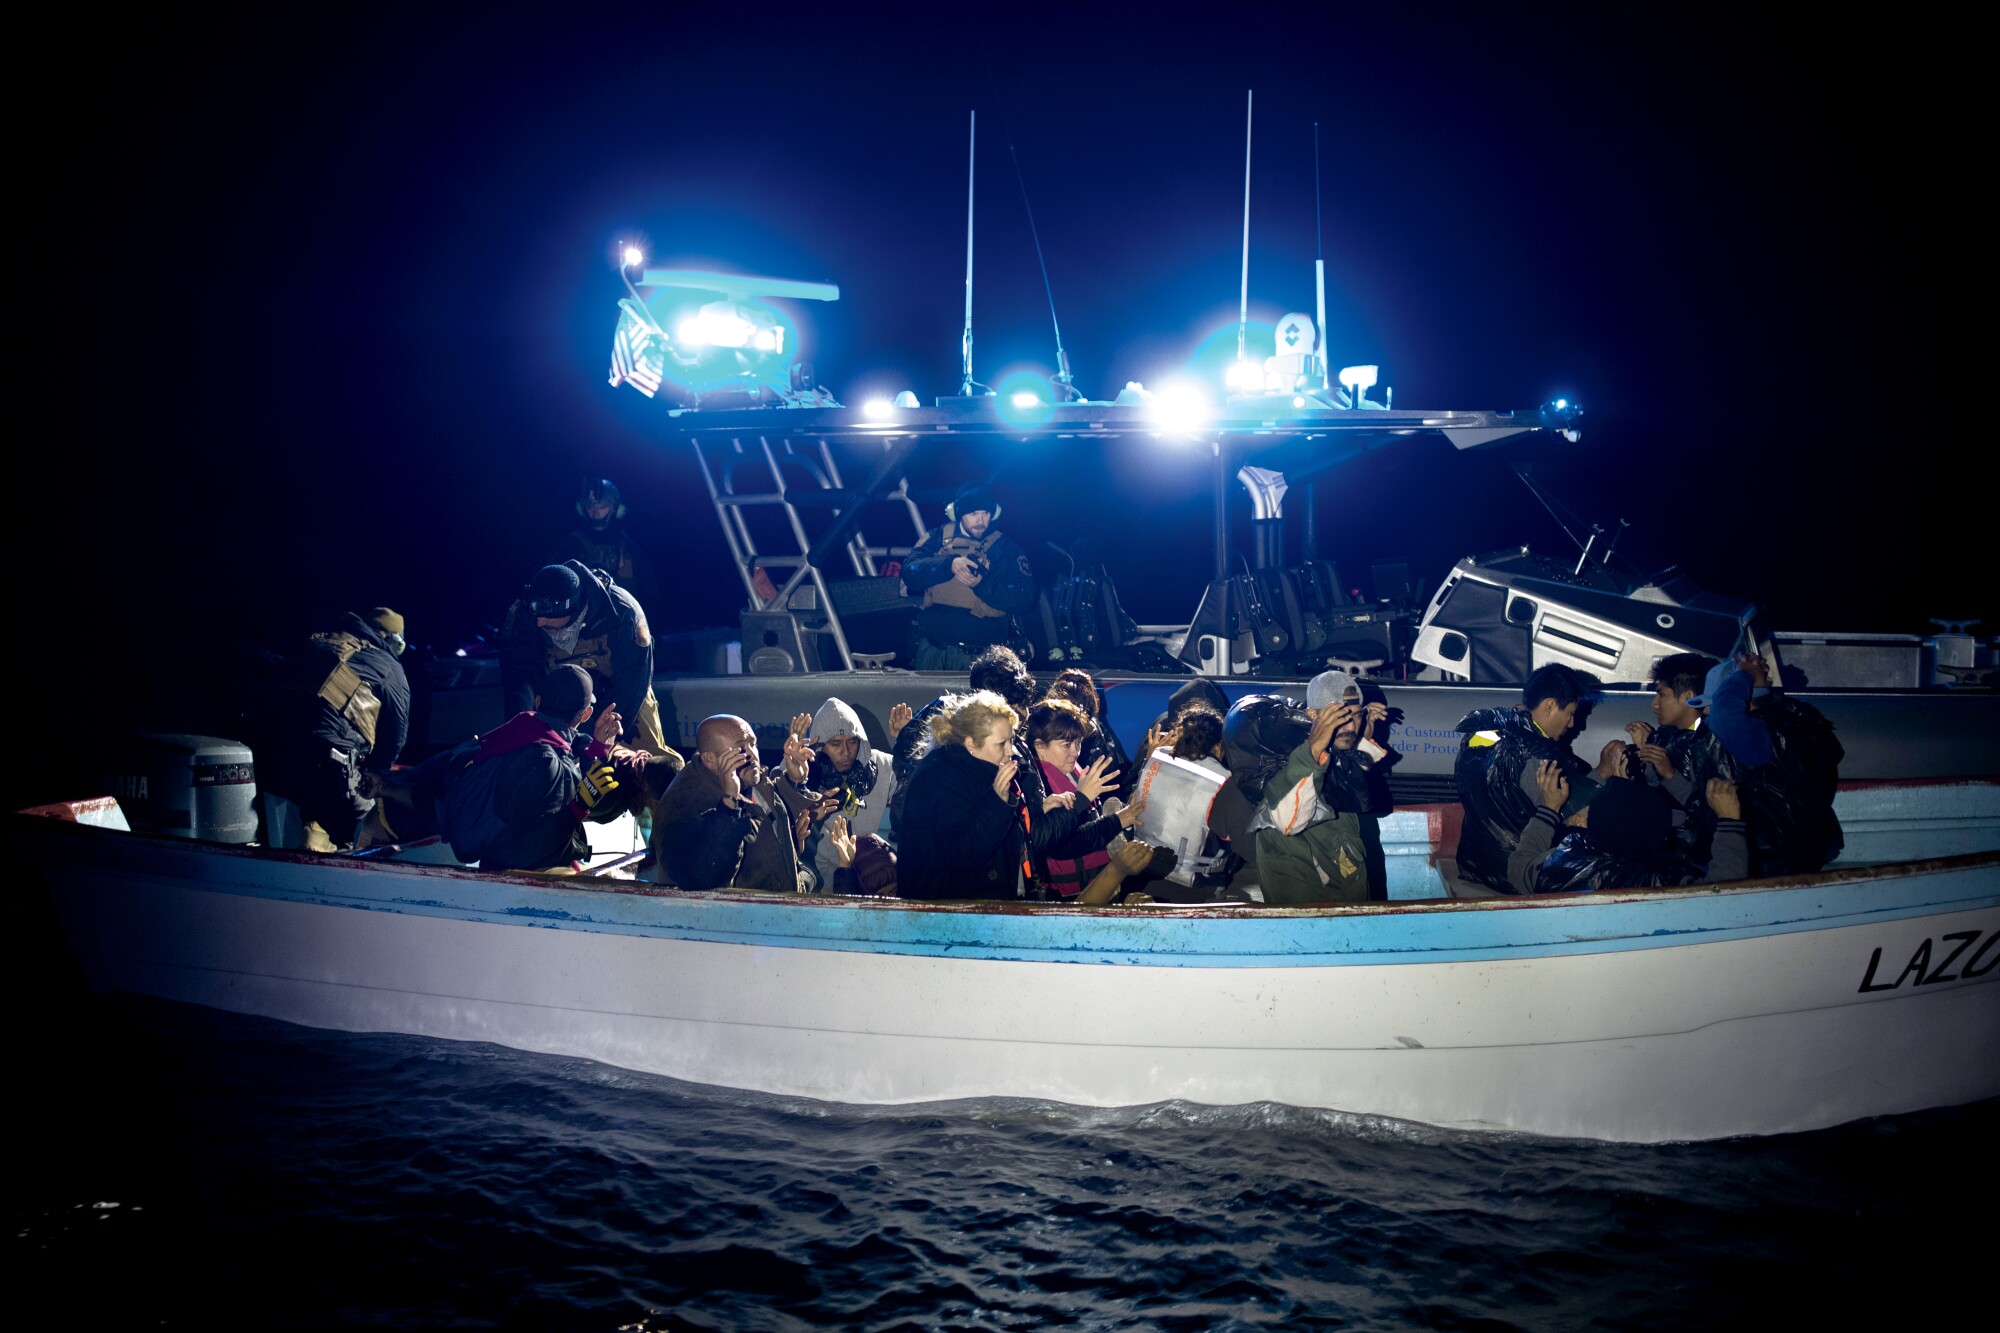 C.B.P. agents transfer migrants to the enforcement vessel